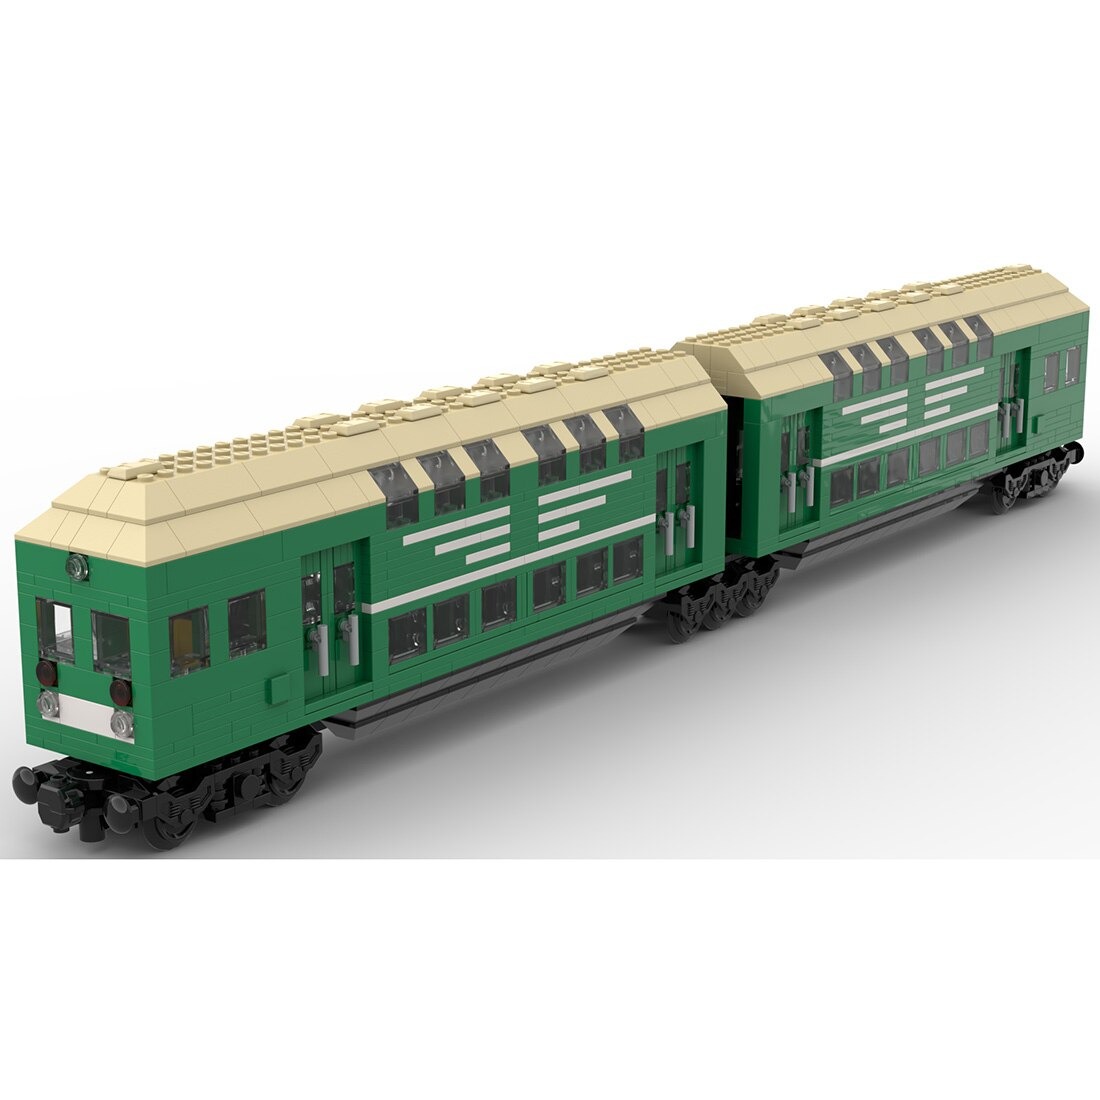 authorized moc 109281 7 axle train carri main 5 - KAZI Block